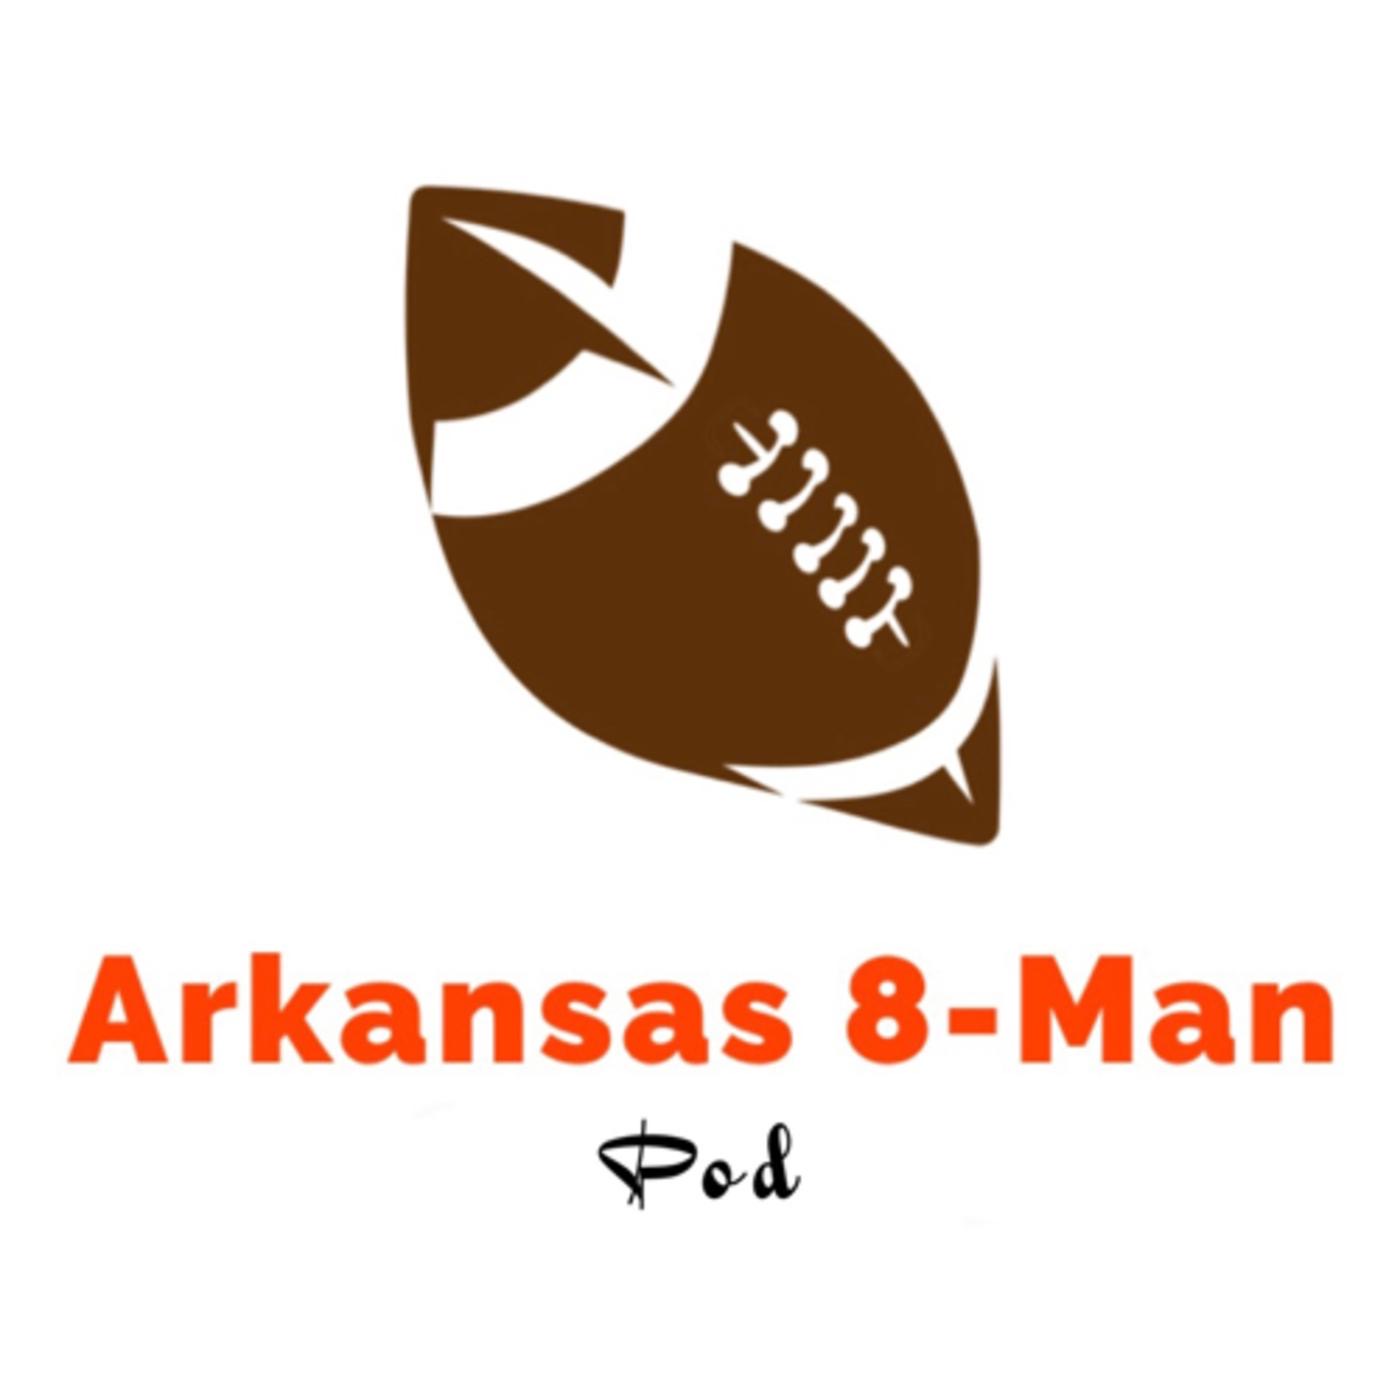 Arkansas 8-Man Pod Episode 6